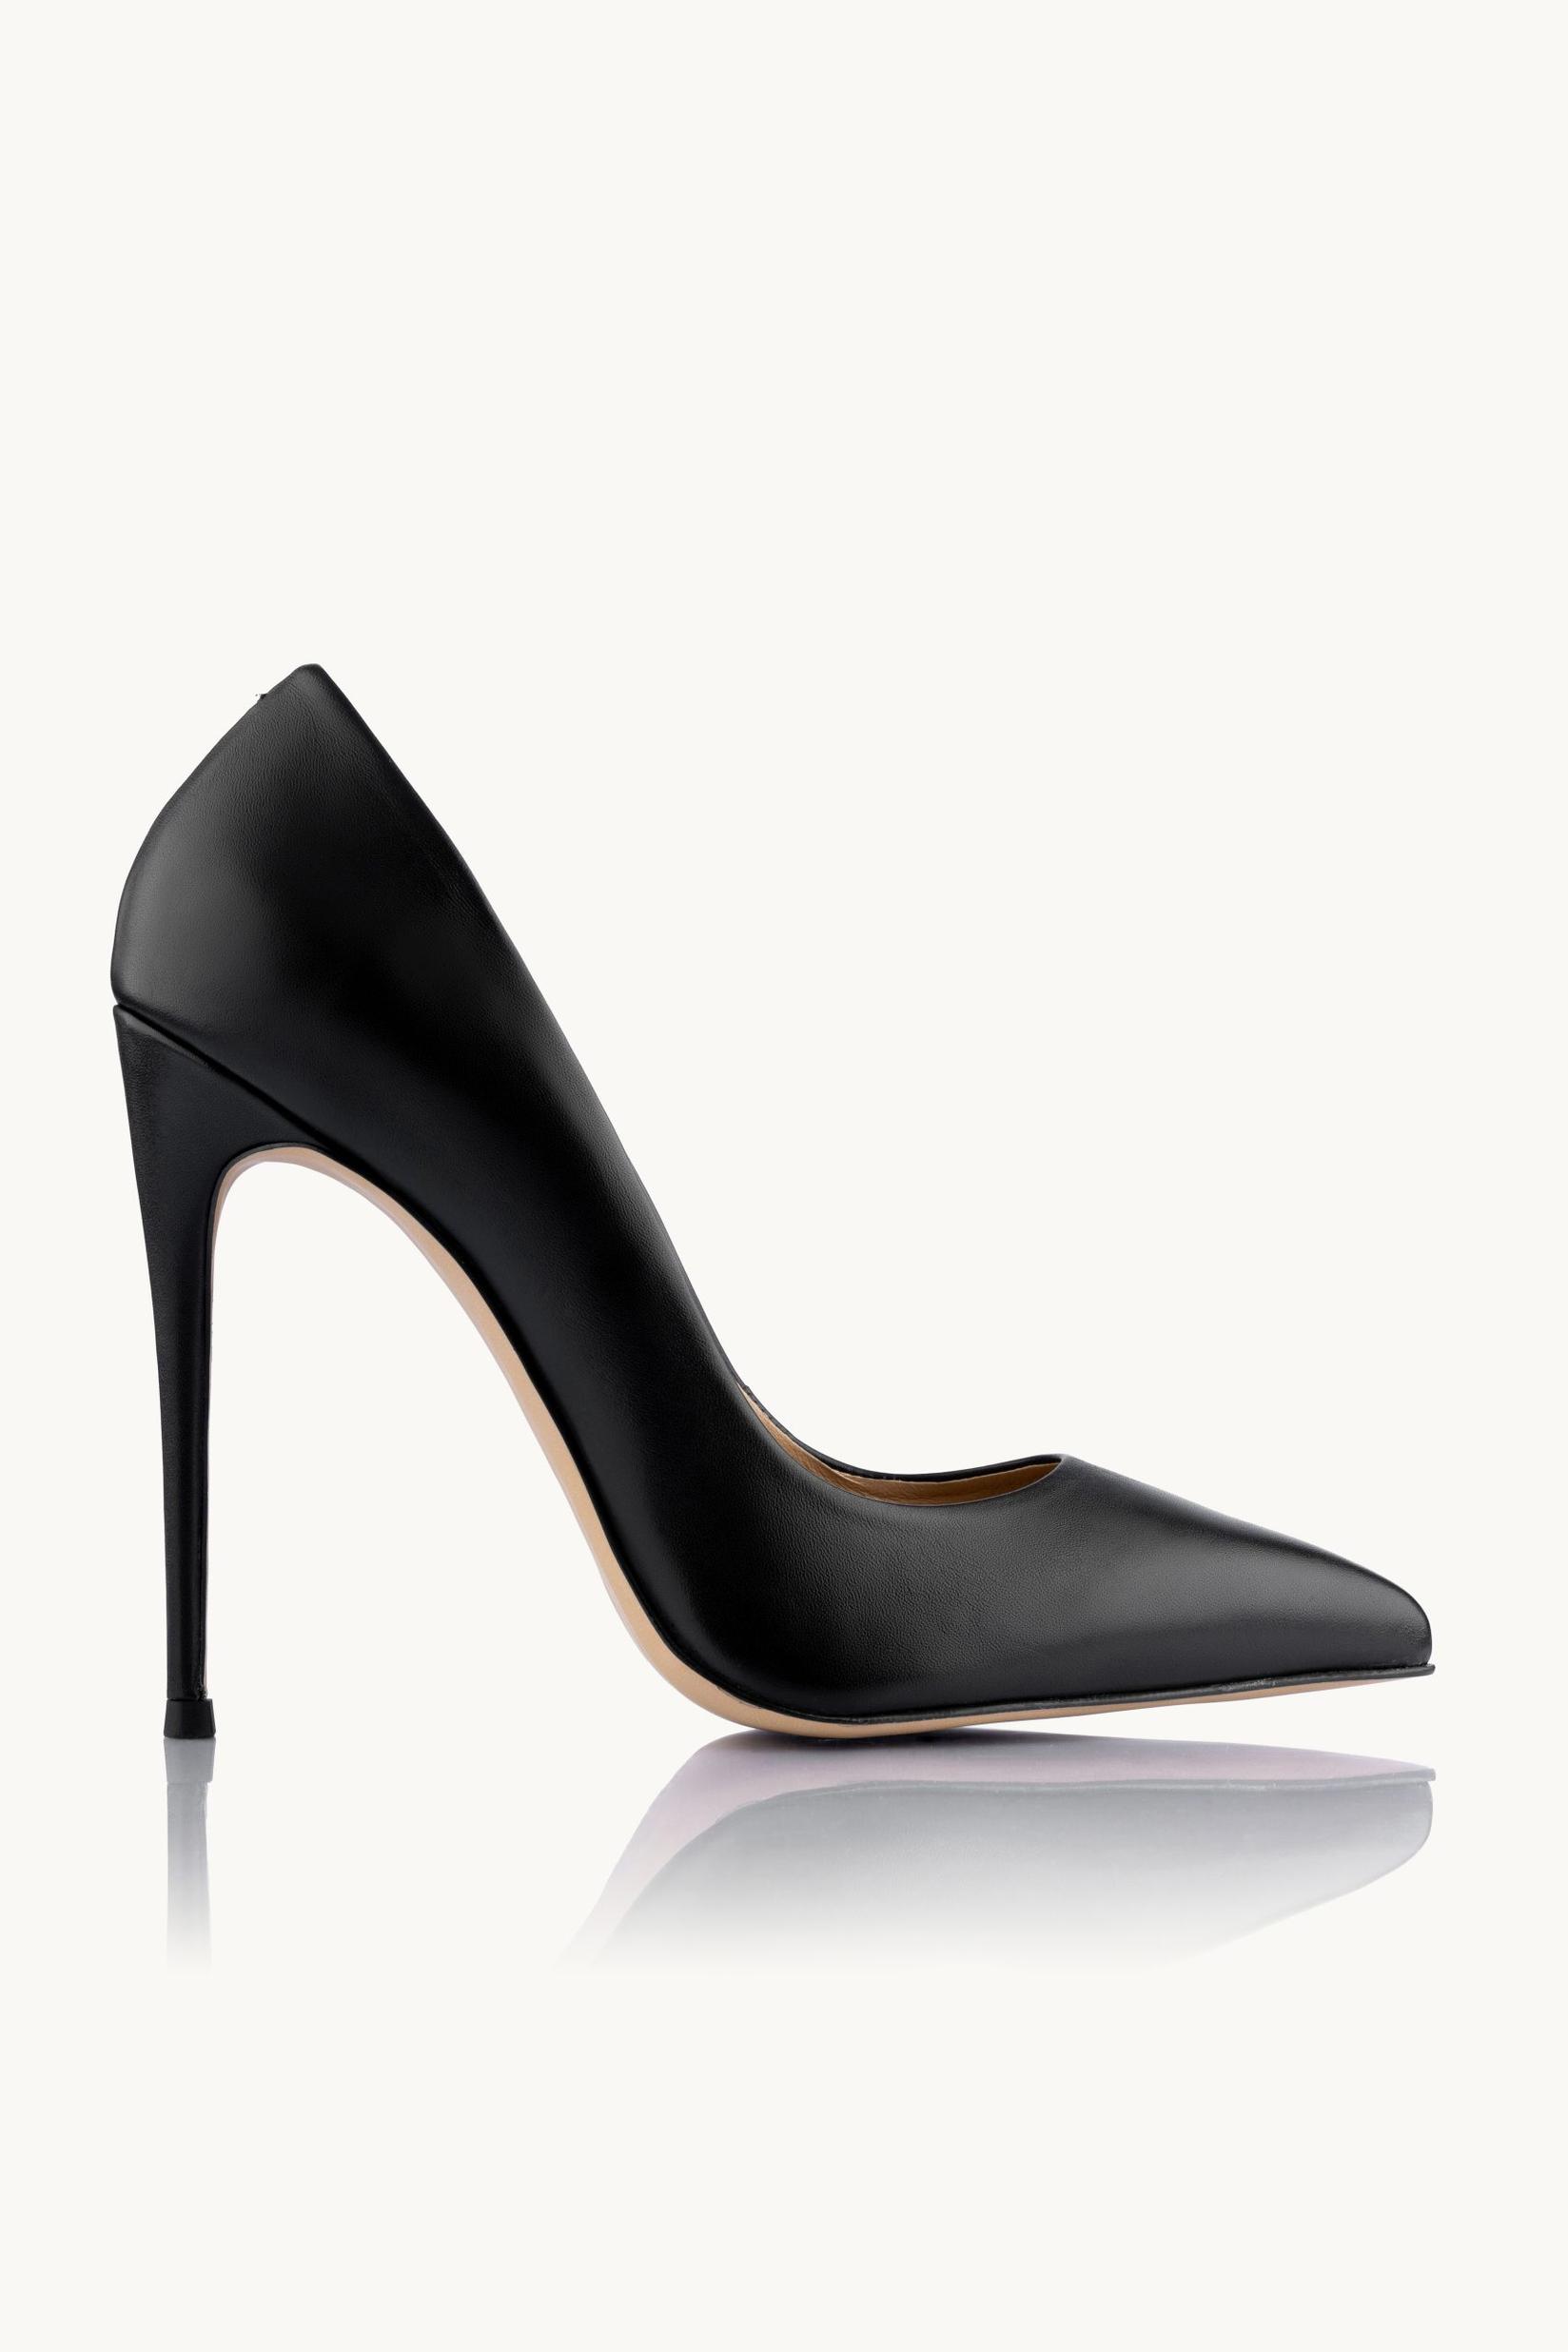 Selected image for NAKA Ženske cipele Black Euphoria crne